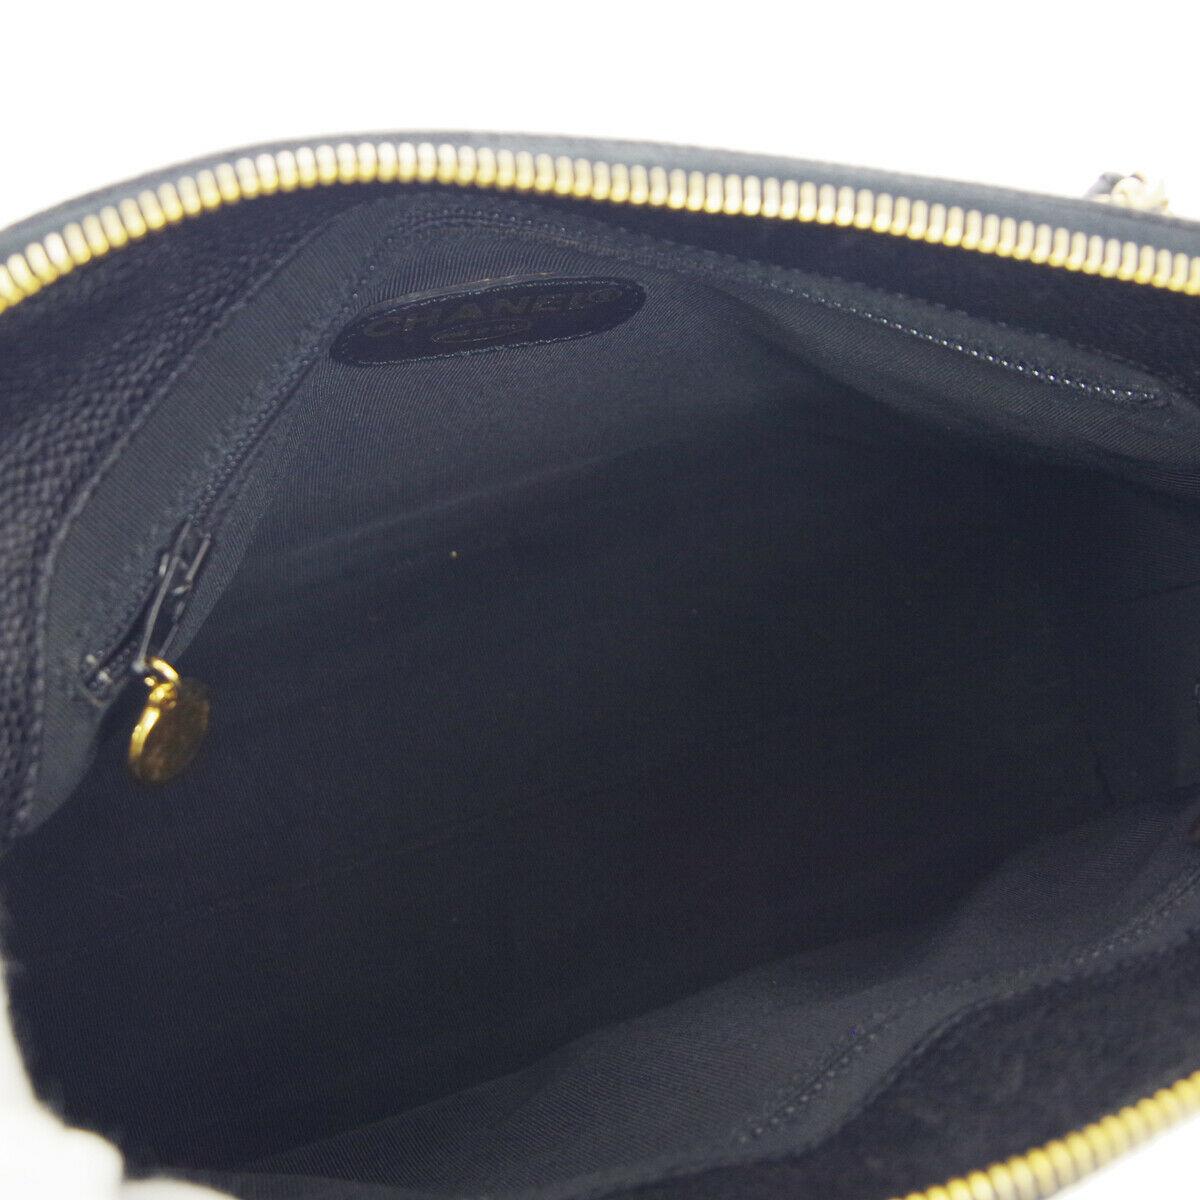 Chanel Black Leather Gold Chain Medium Carryall Shopper Tote Shoulder Bag 2